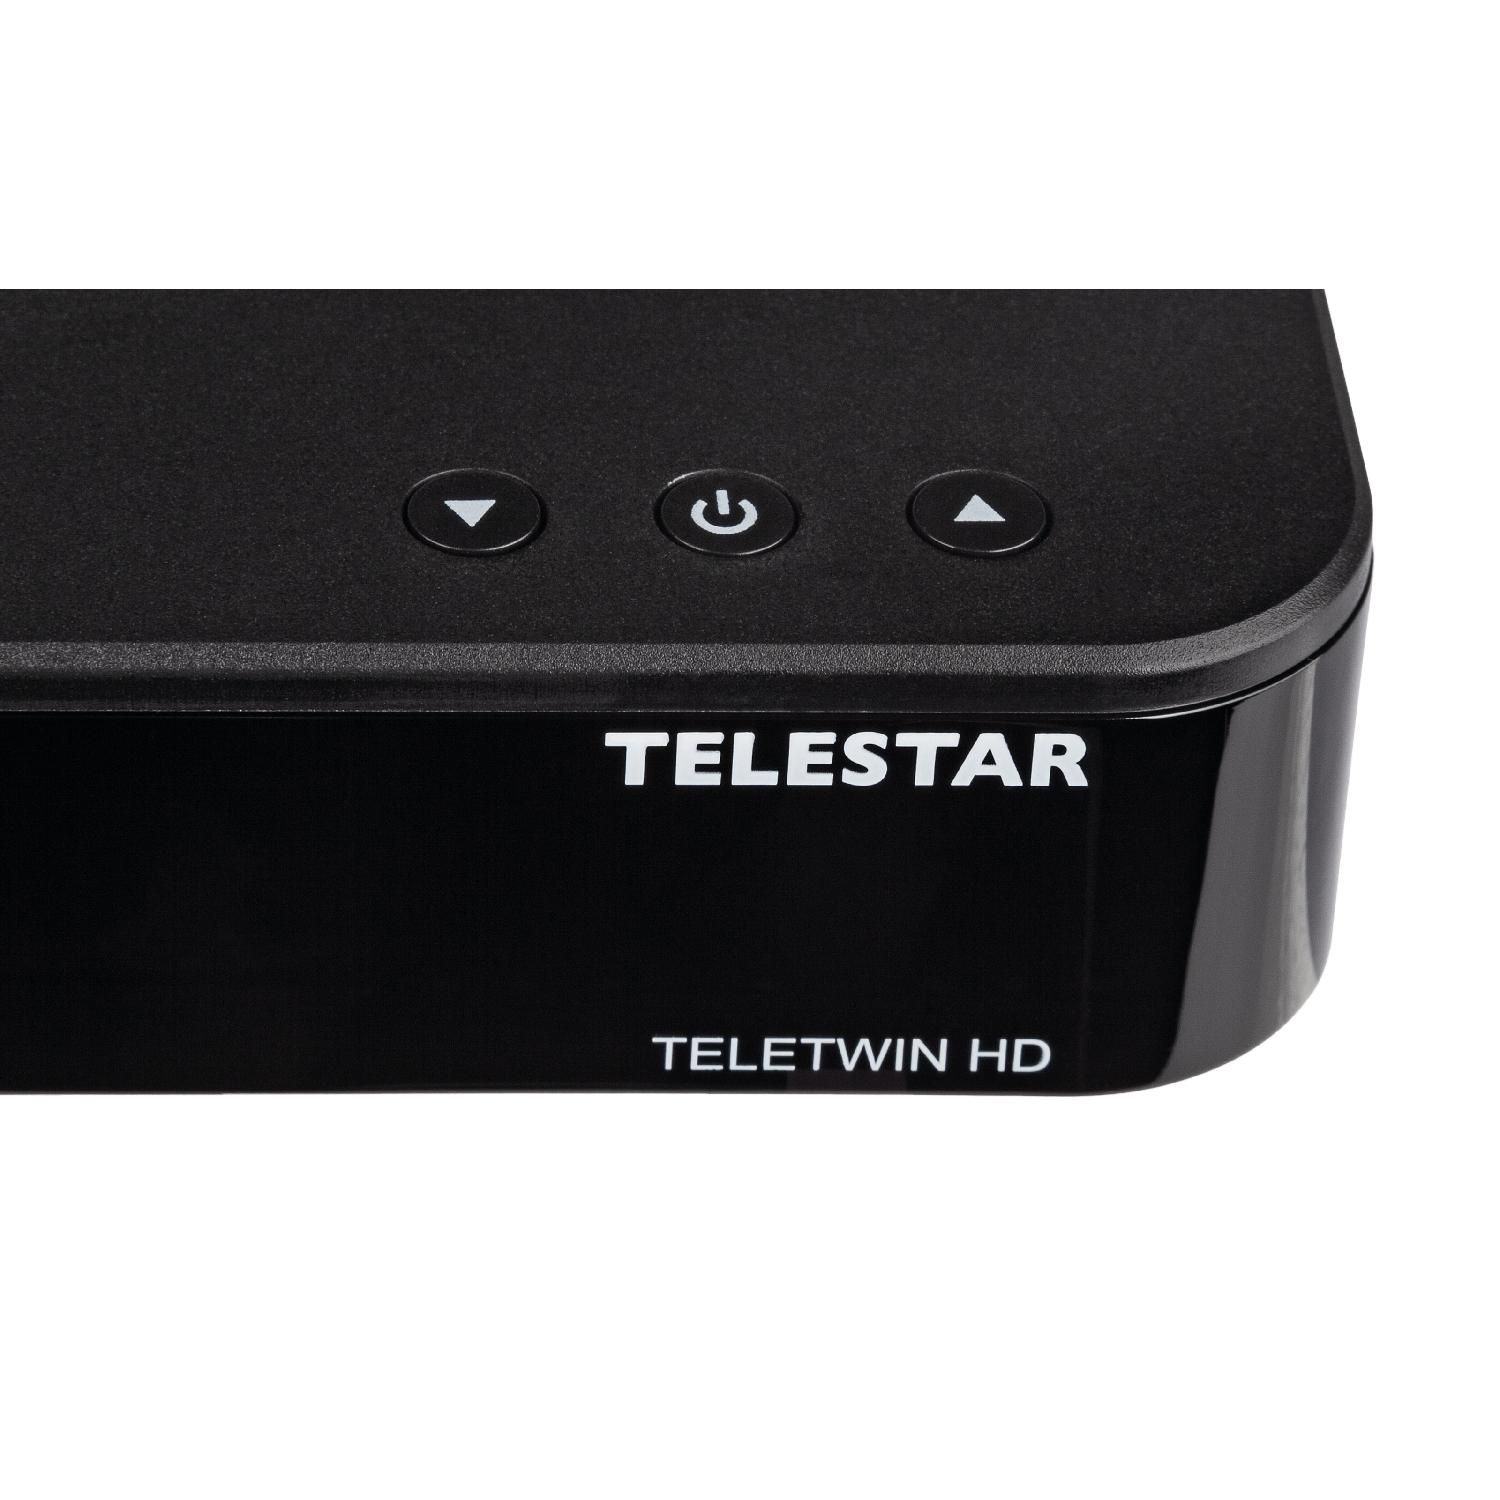 TELESTAR TELETWIN HD (schwarz) SAT-Receiver